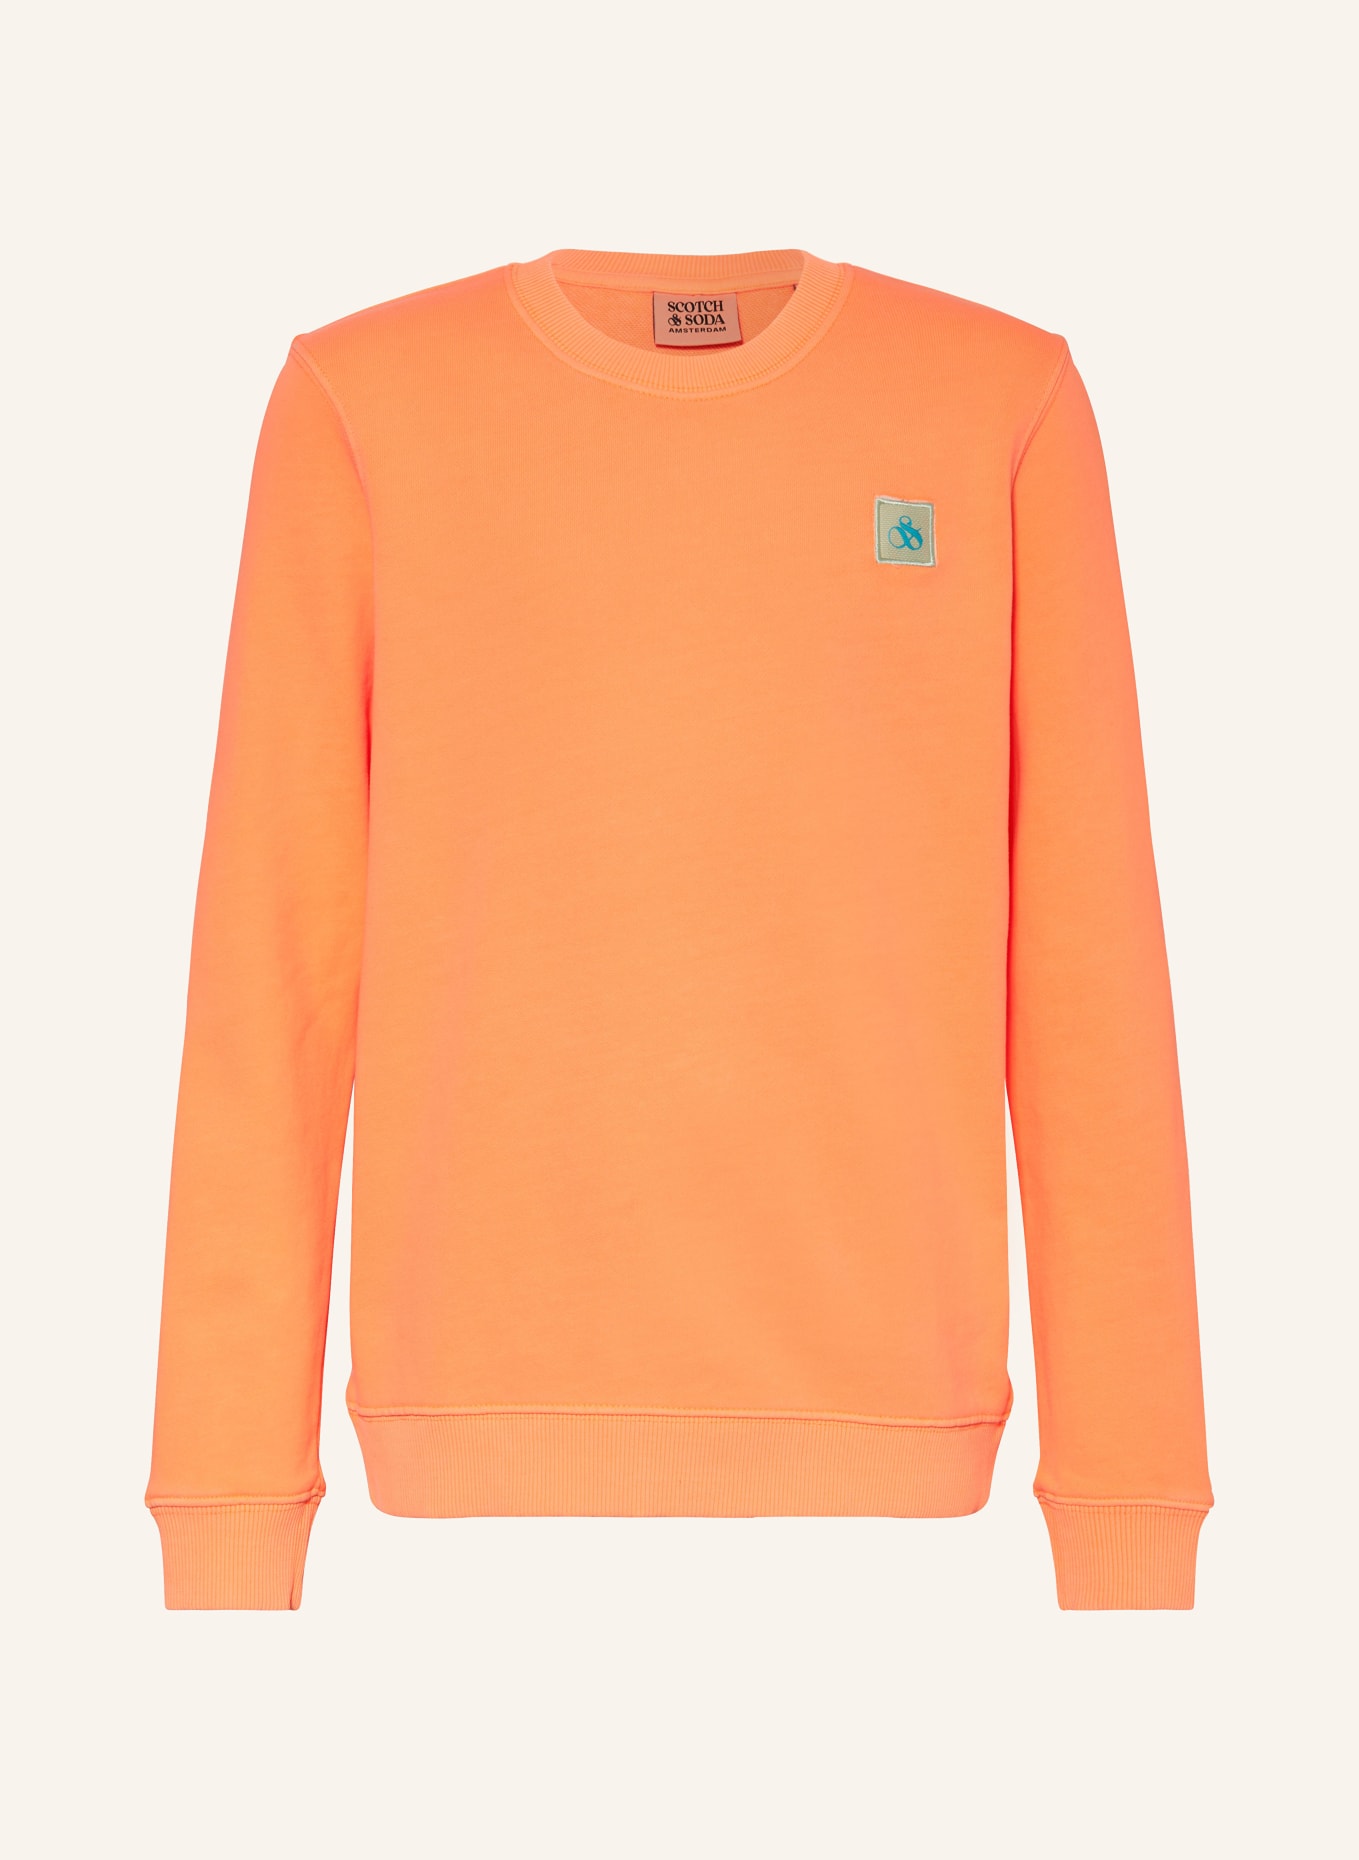 SCOTCH & SODA Sweatshirt, Farbe: NEONORANGE (Bild 1)